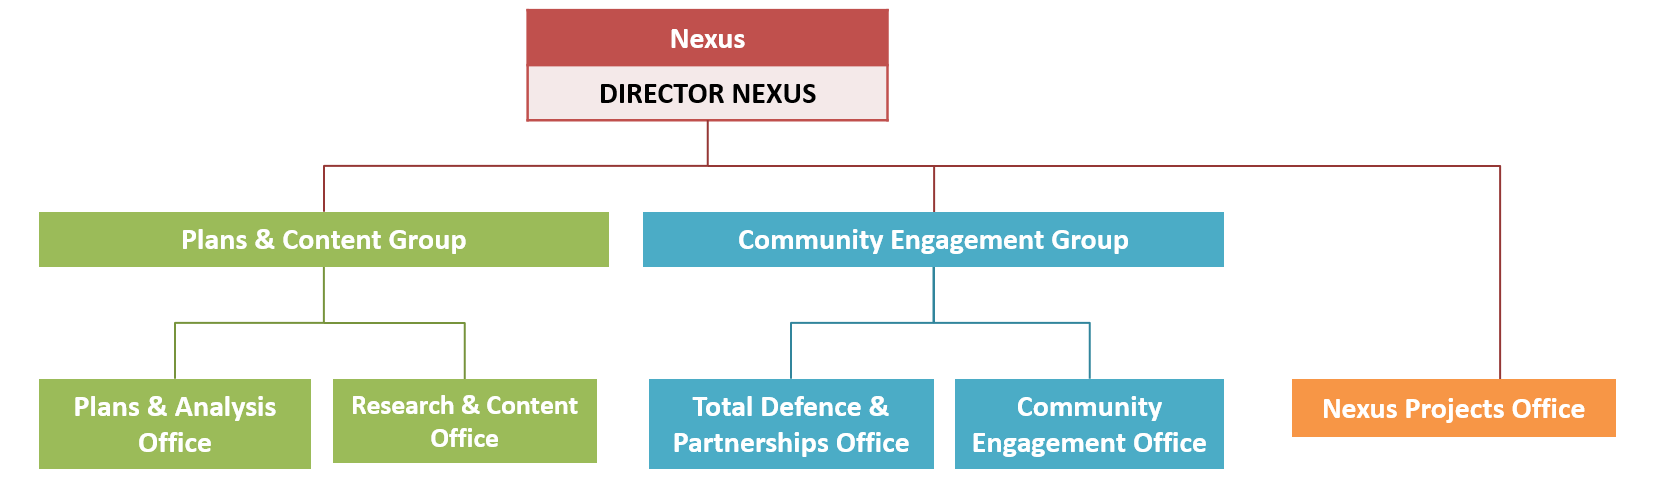 Nexus Structure